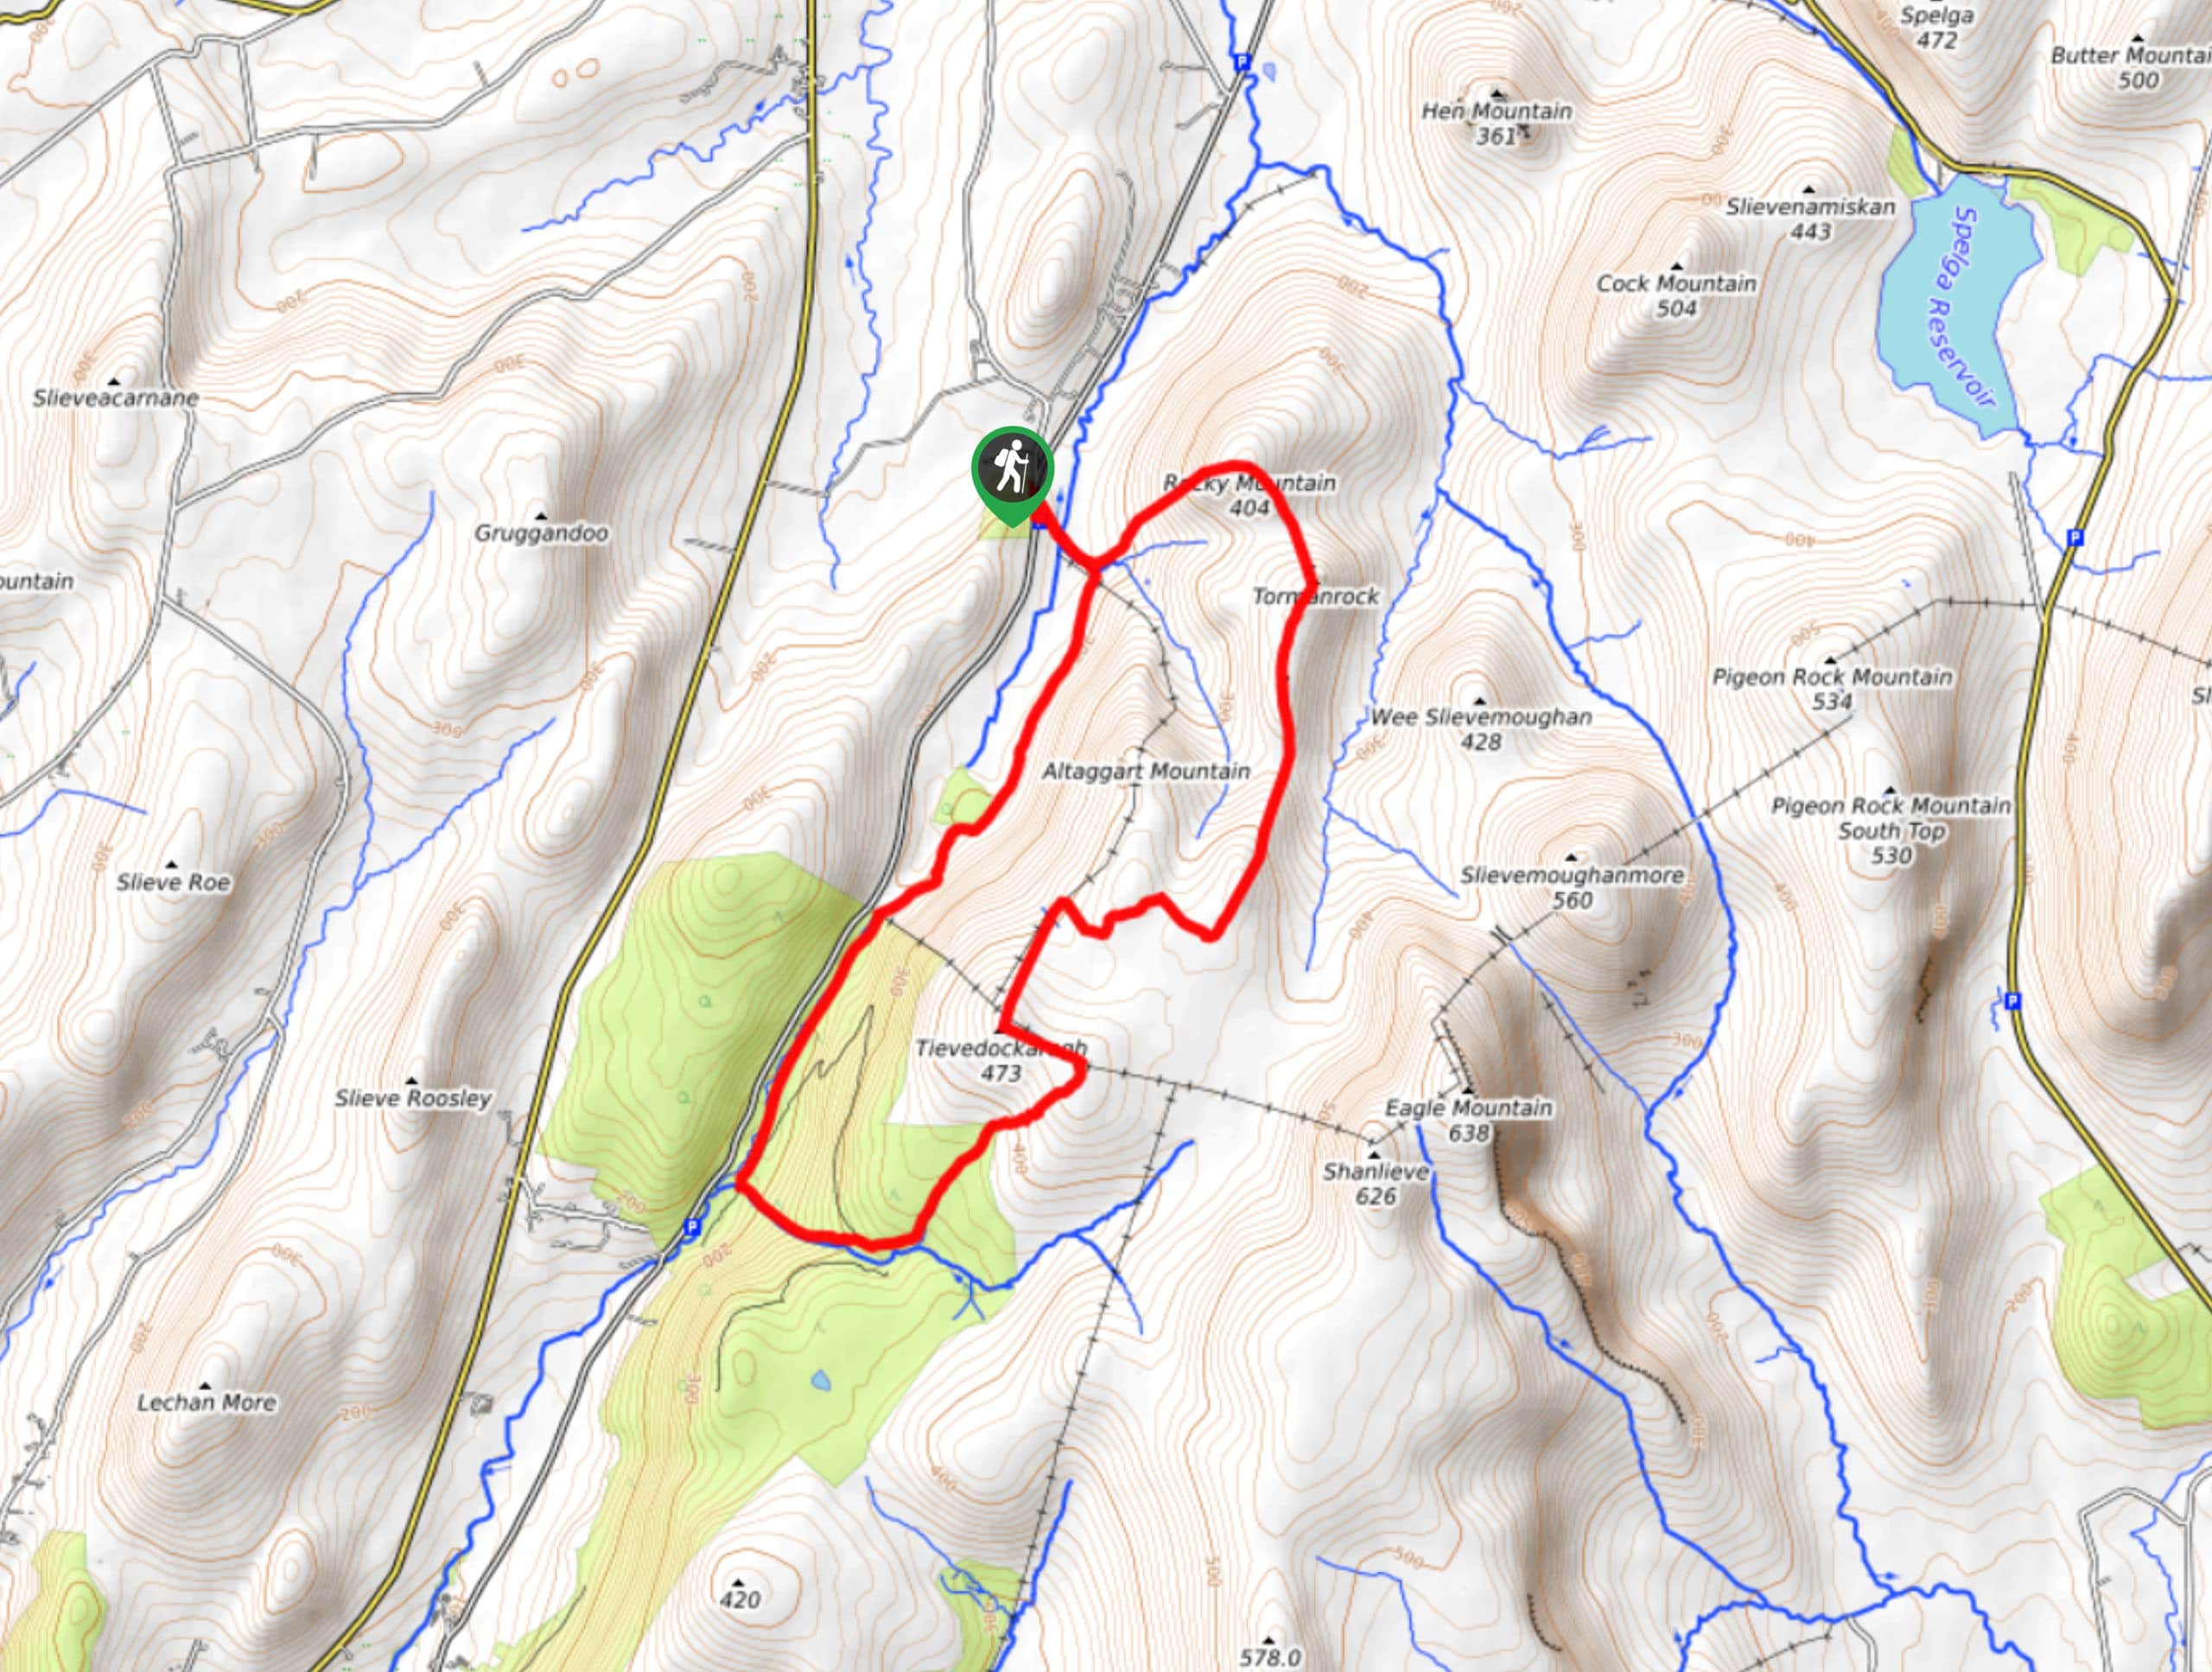 Rocky Mountain and Tievedockaragh Circular Walk Map